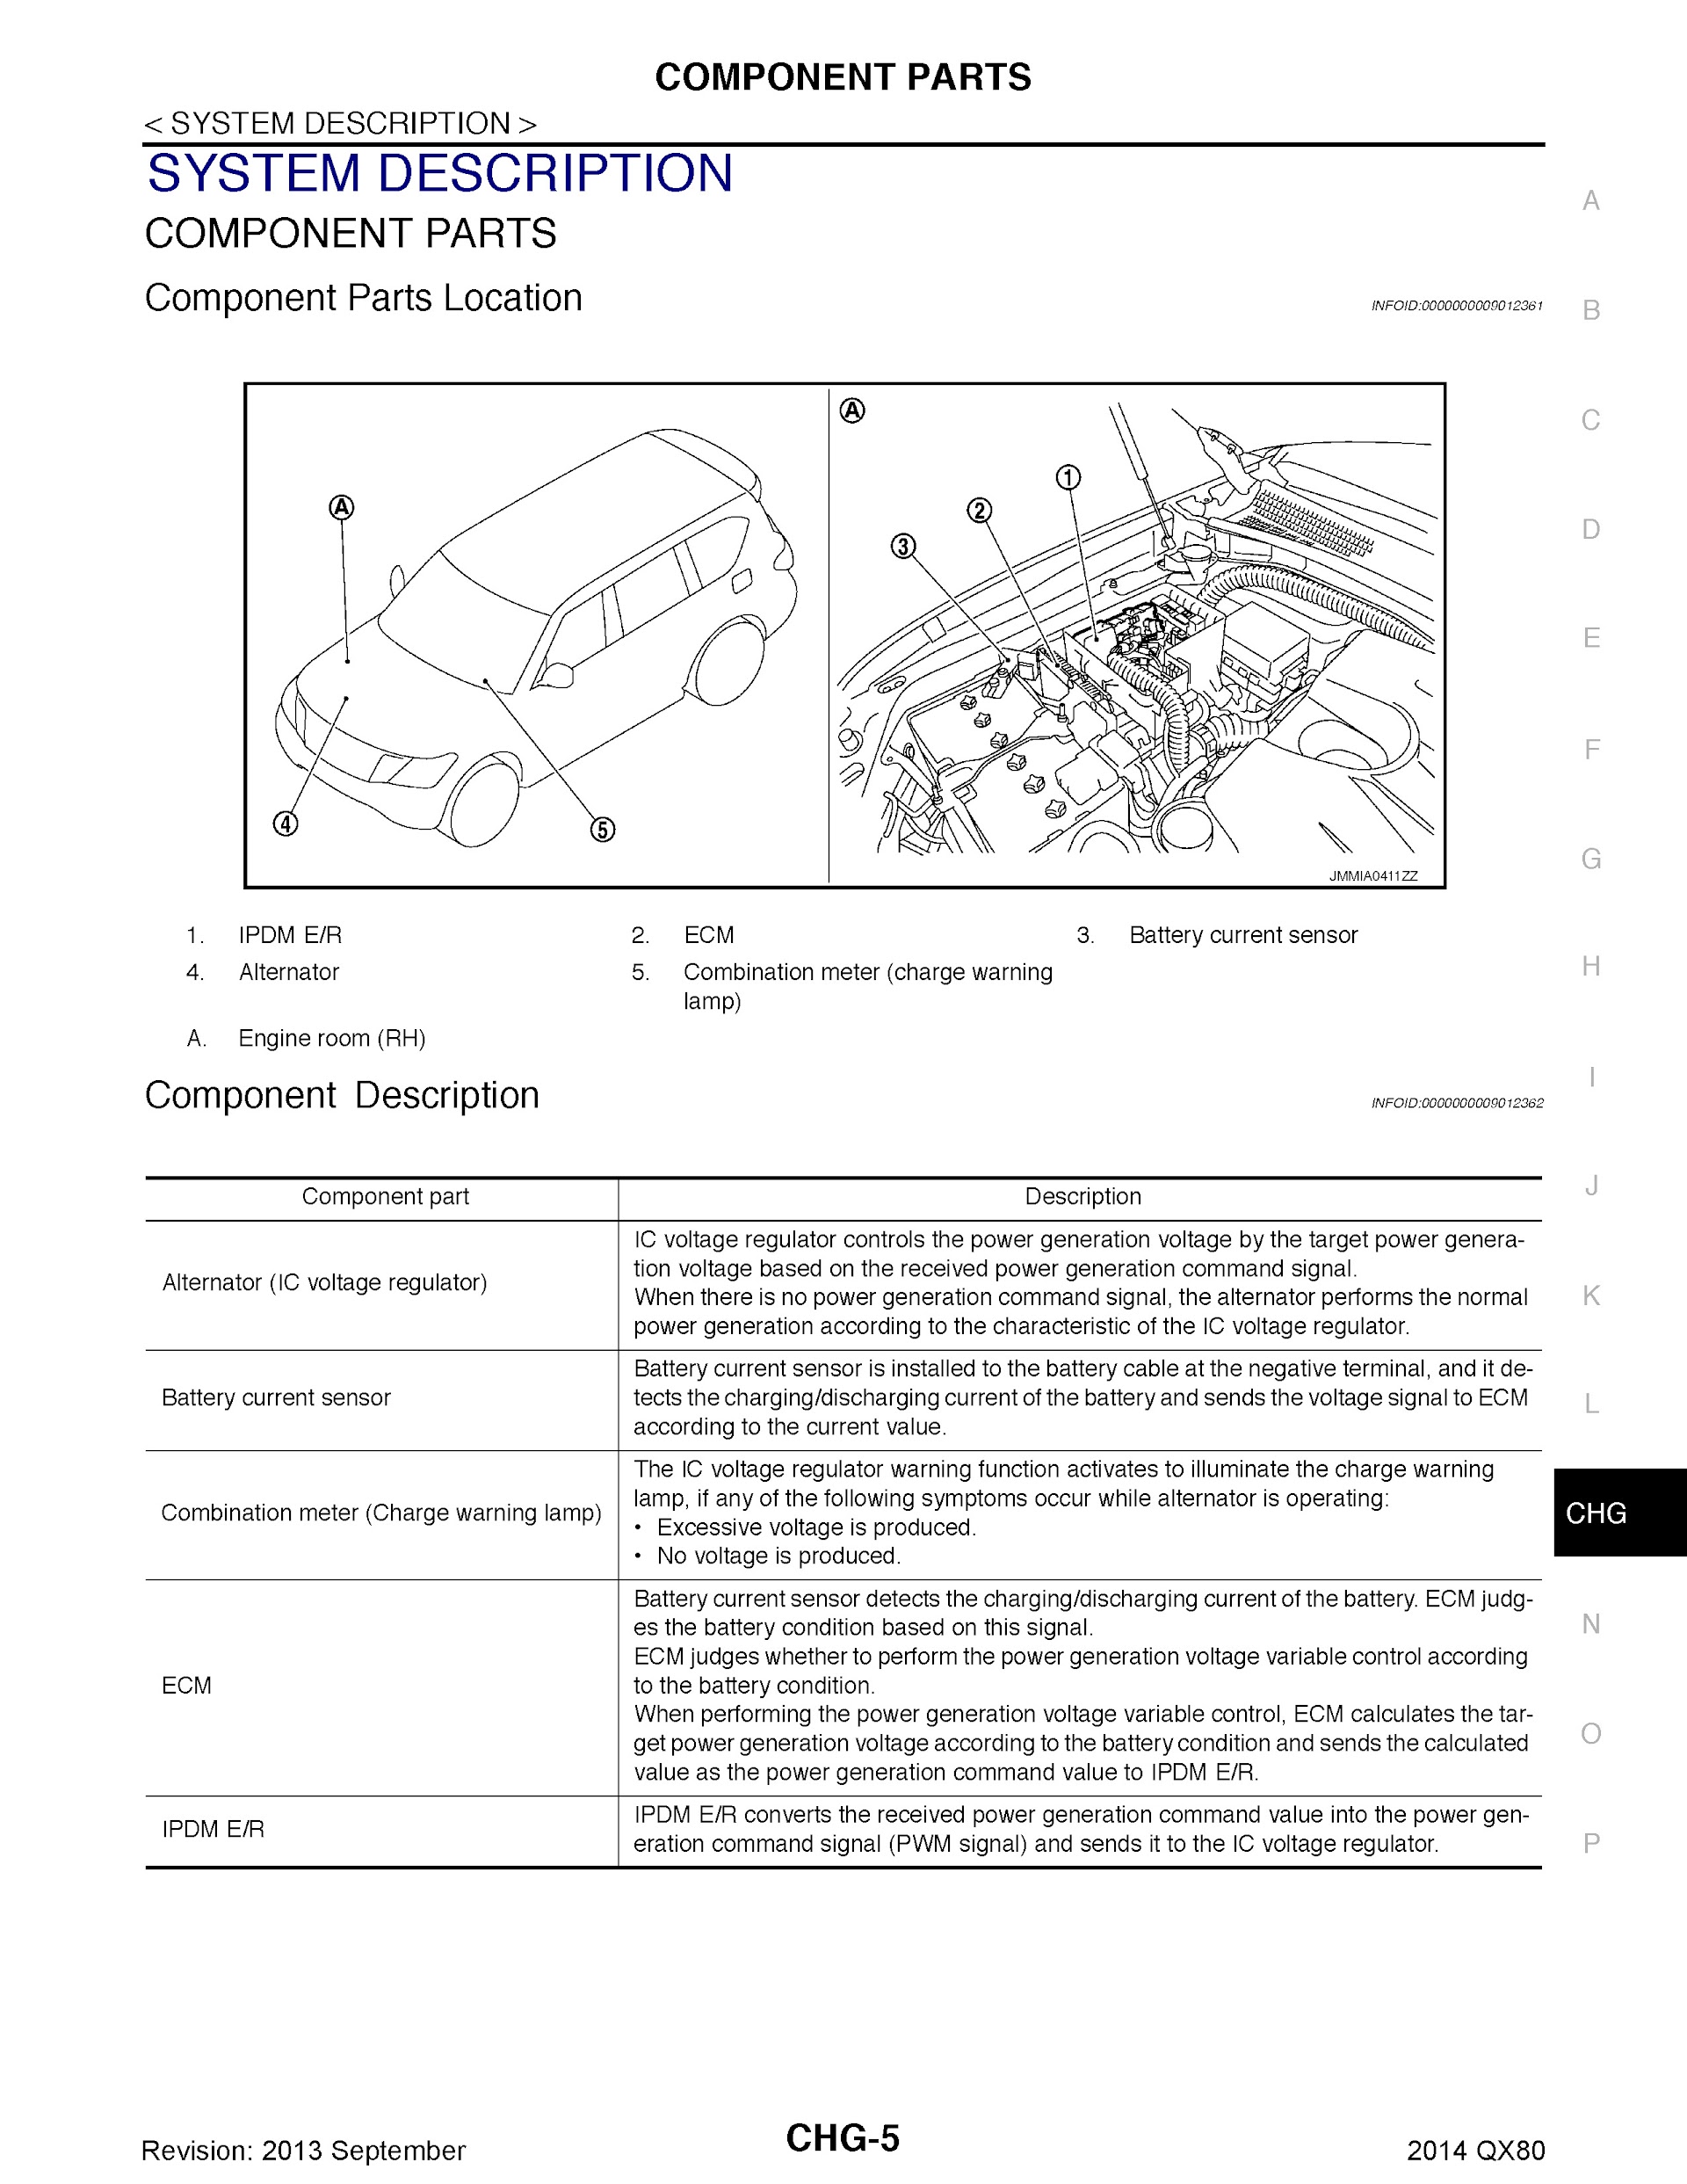 2014 Infiniti QX80 Repair Manual, Engine Unit Component Parts